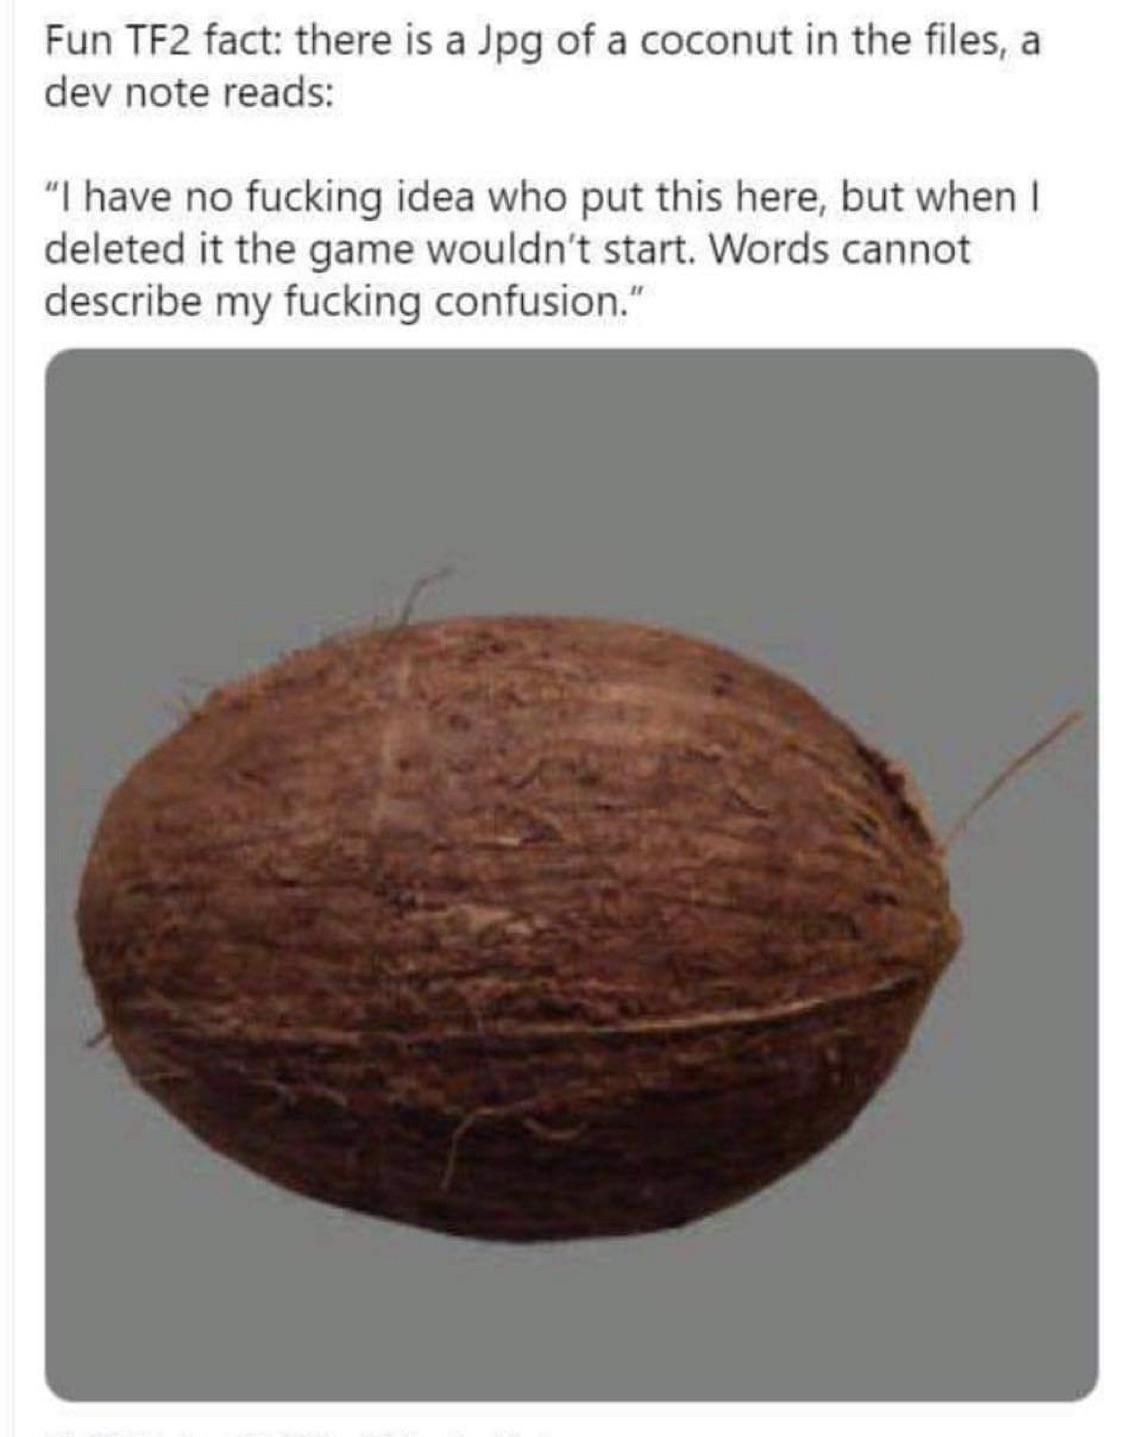 Praise the coconut